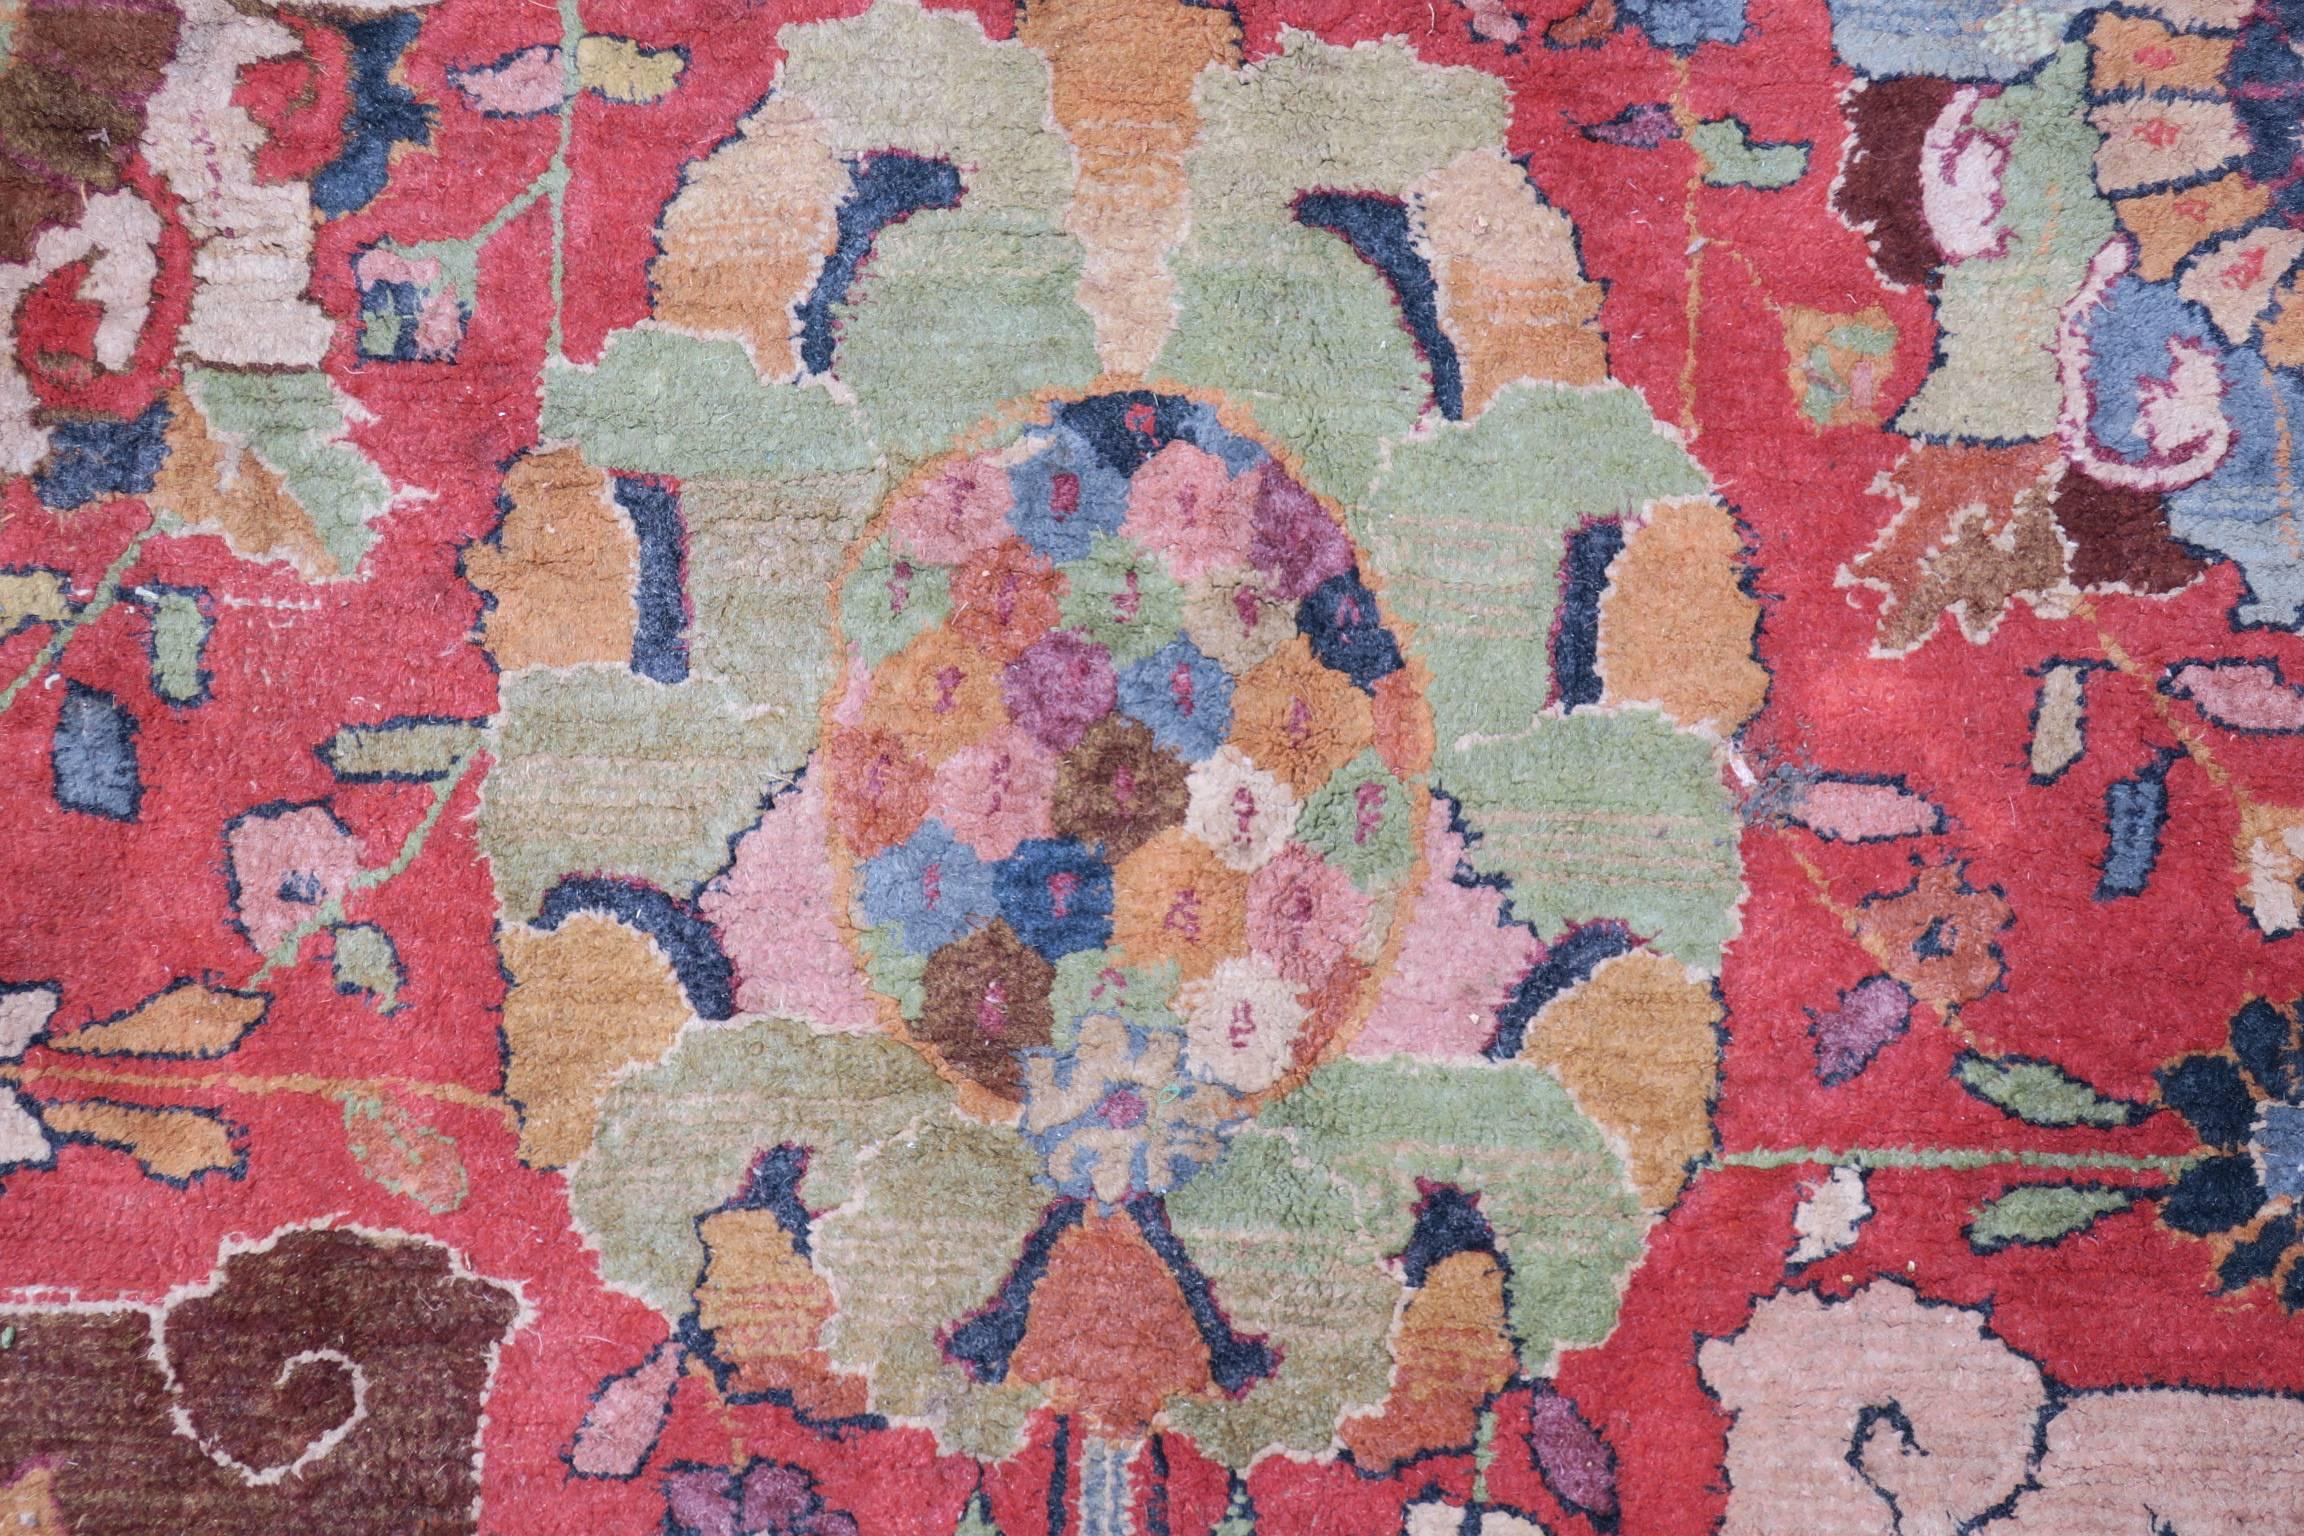 Austrian Antique European Hooked Carpet with Big Shah Abbas Design, 1920